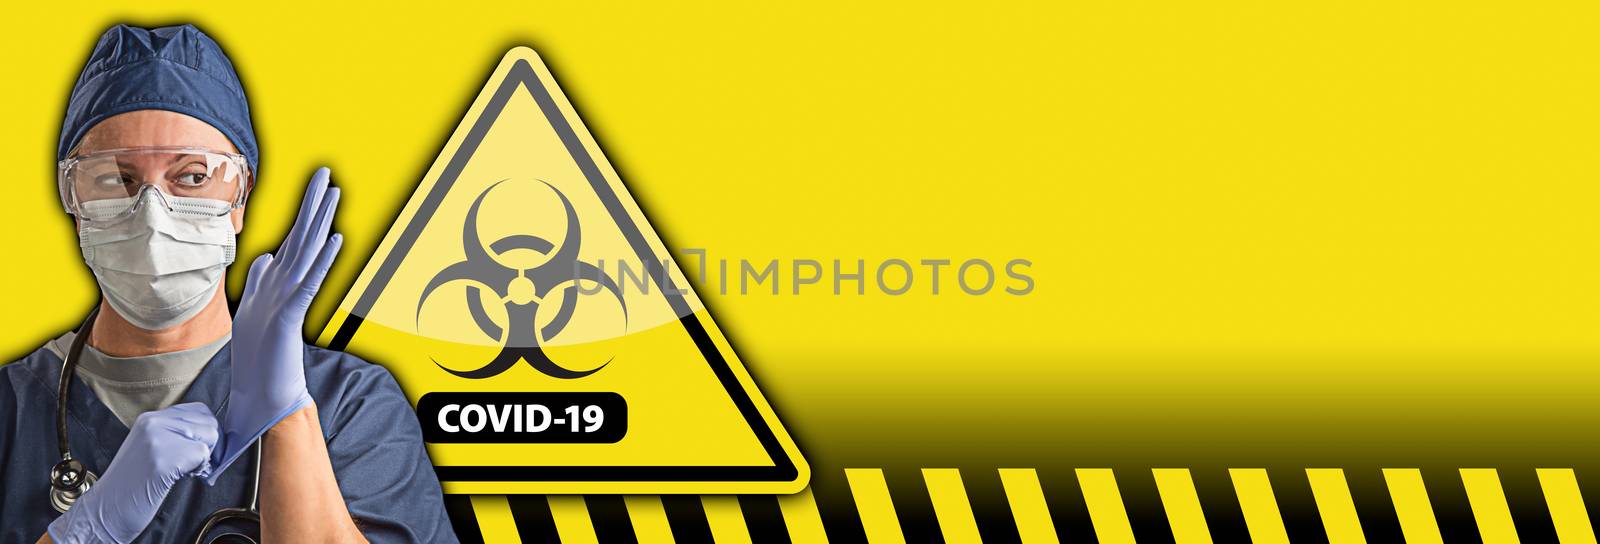 Banner of Doctor or Nurse Wearing Protective Equipment and Coronavirus COVID-19 Bio-hazard Warning Sign Behind.